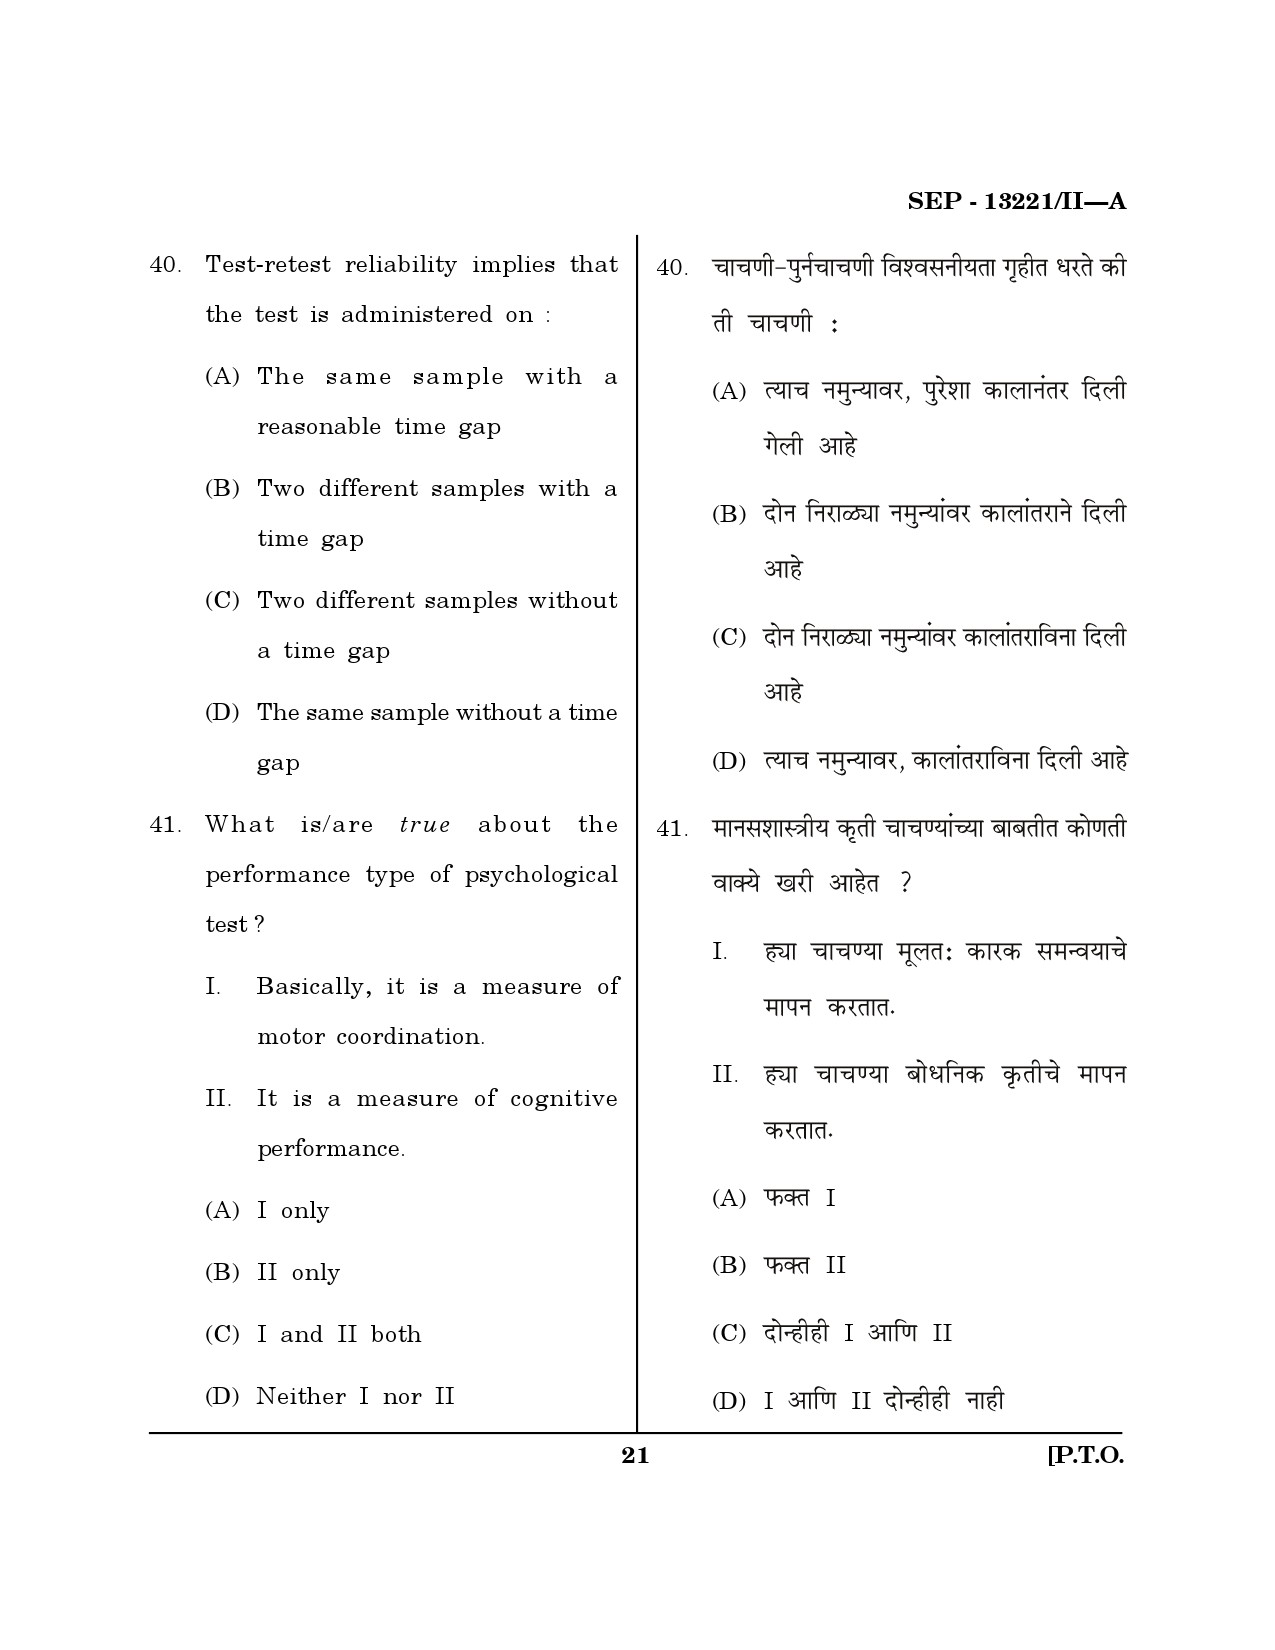 Maharashtra SET Psychology Exam Question Paper September 2021 20